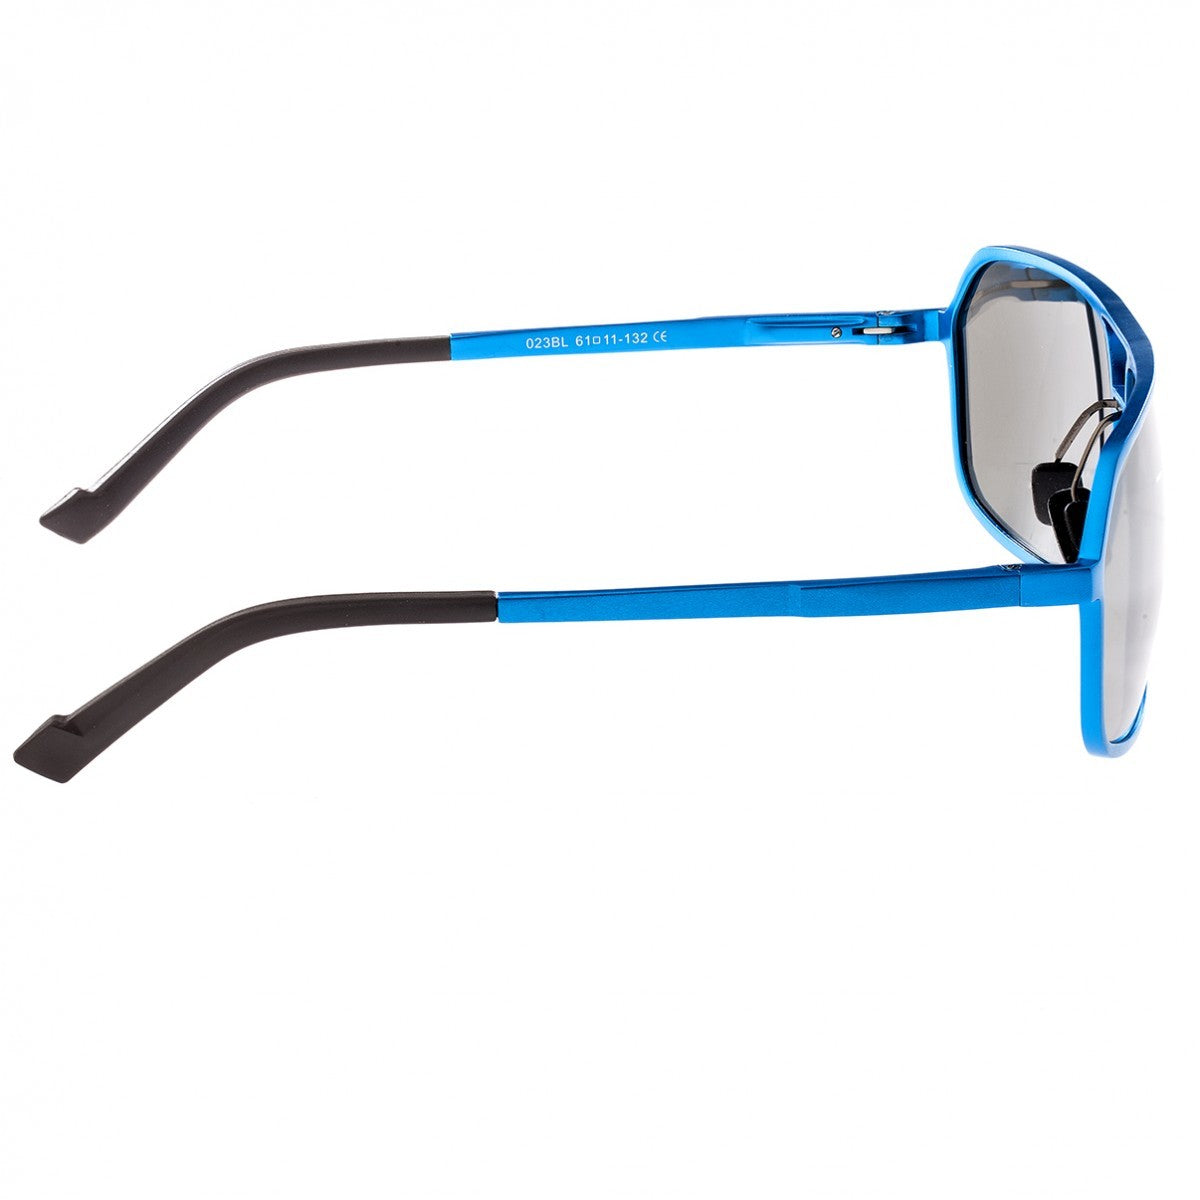 Breed Fornax Aluminium Polarized Sunglasses - Blue/Silver - BSG023BL